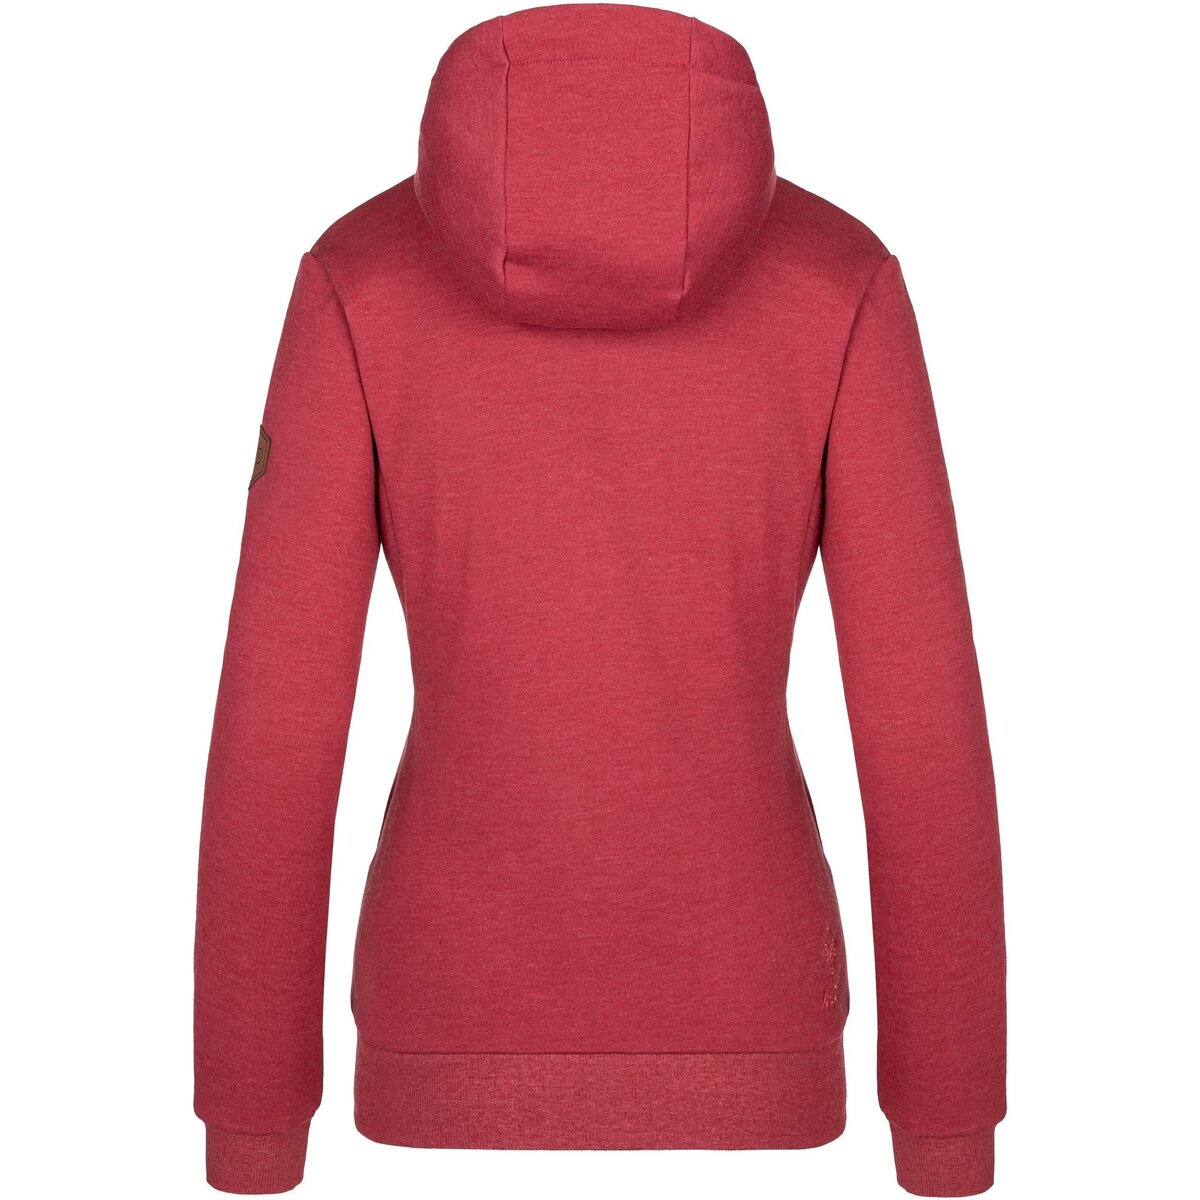 Kilpi Rouge Sweatshirt coton femme ERRY-W i0wfTfaf